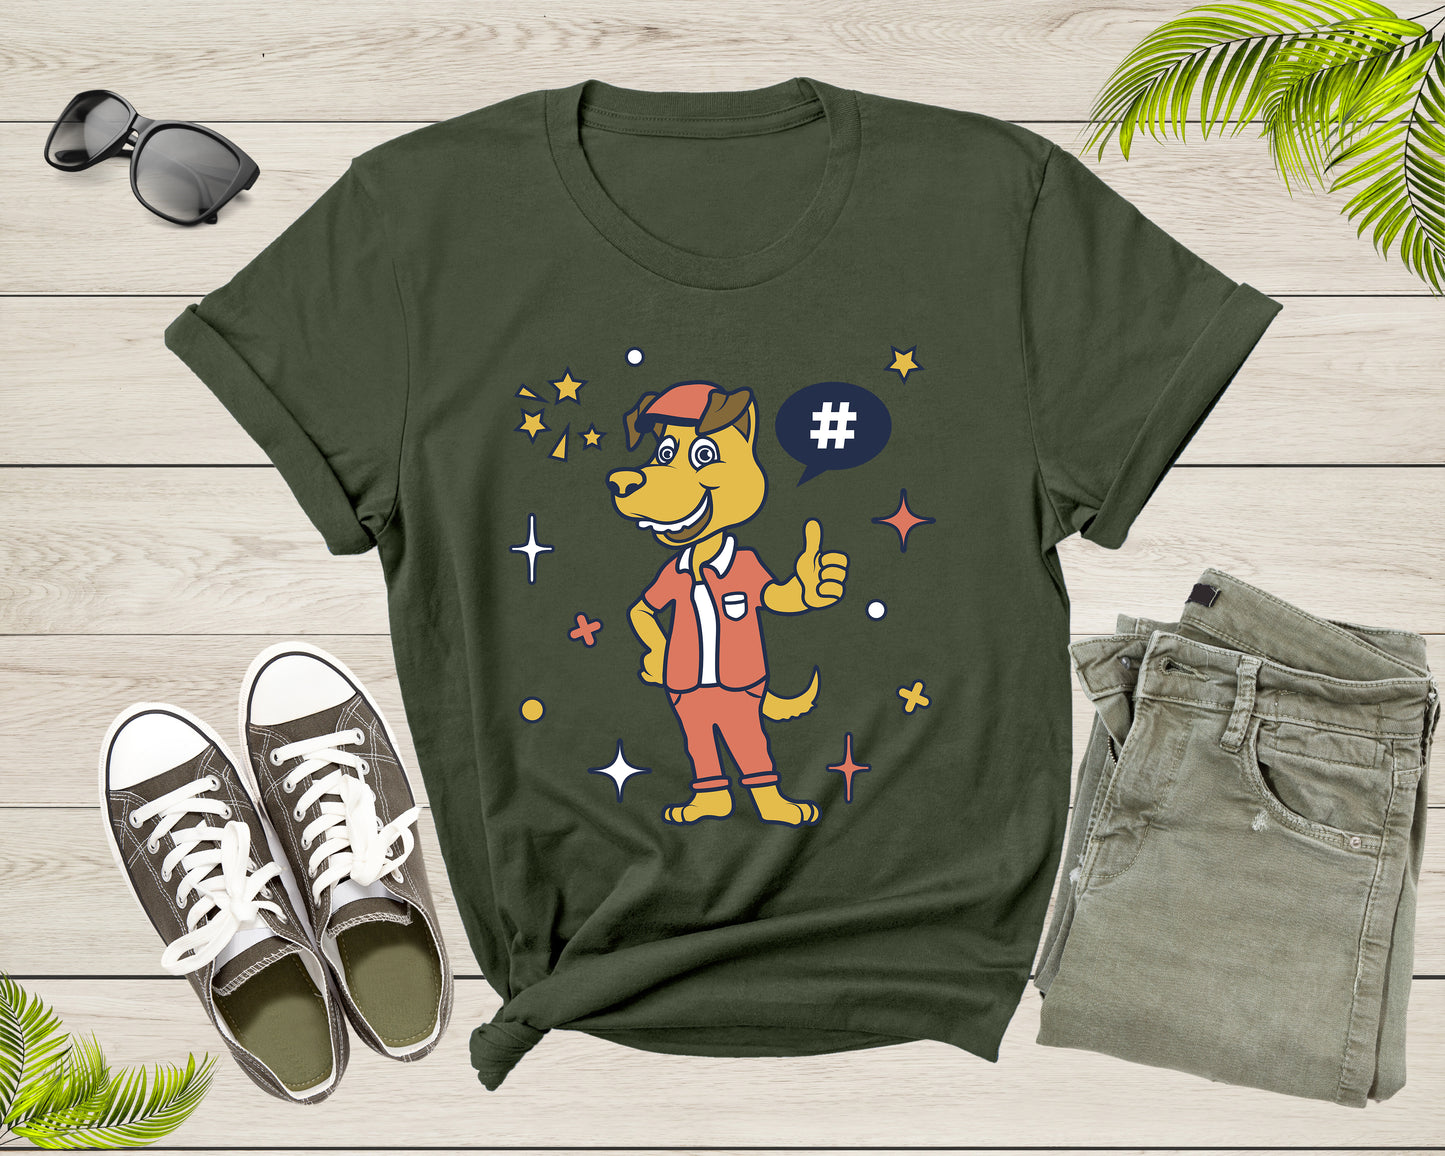 Cute Funky Hipster Goofy Dog Dressed in Cartoon Character T-Shirt Dog Lover Gift T Shirt for Men Women Kids Boys Girls Graphic Tshirt